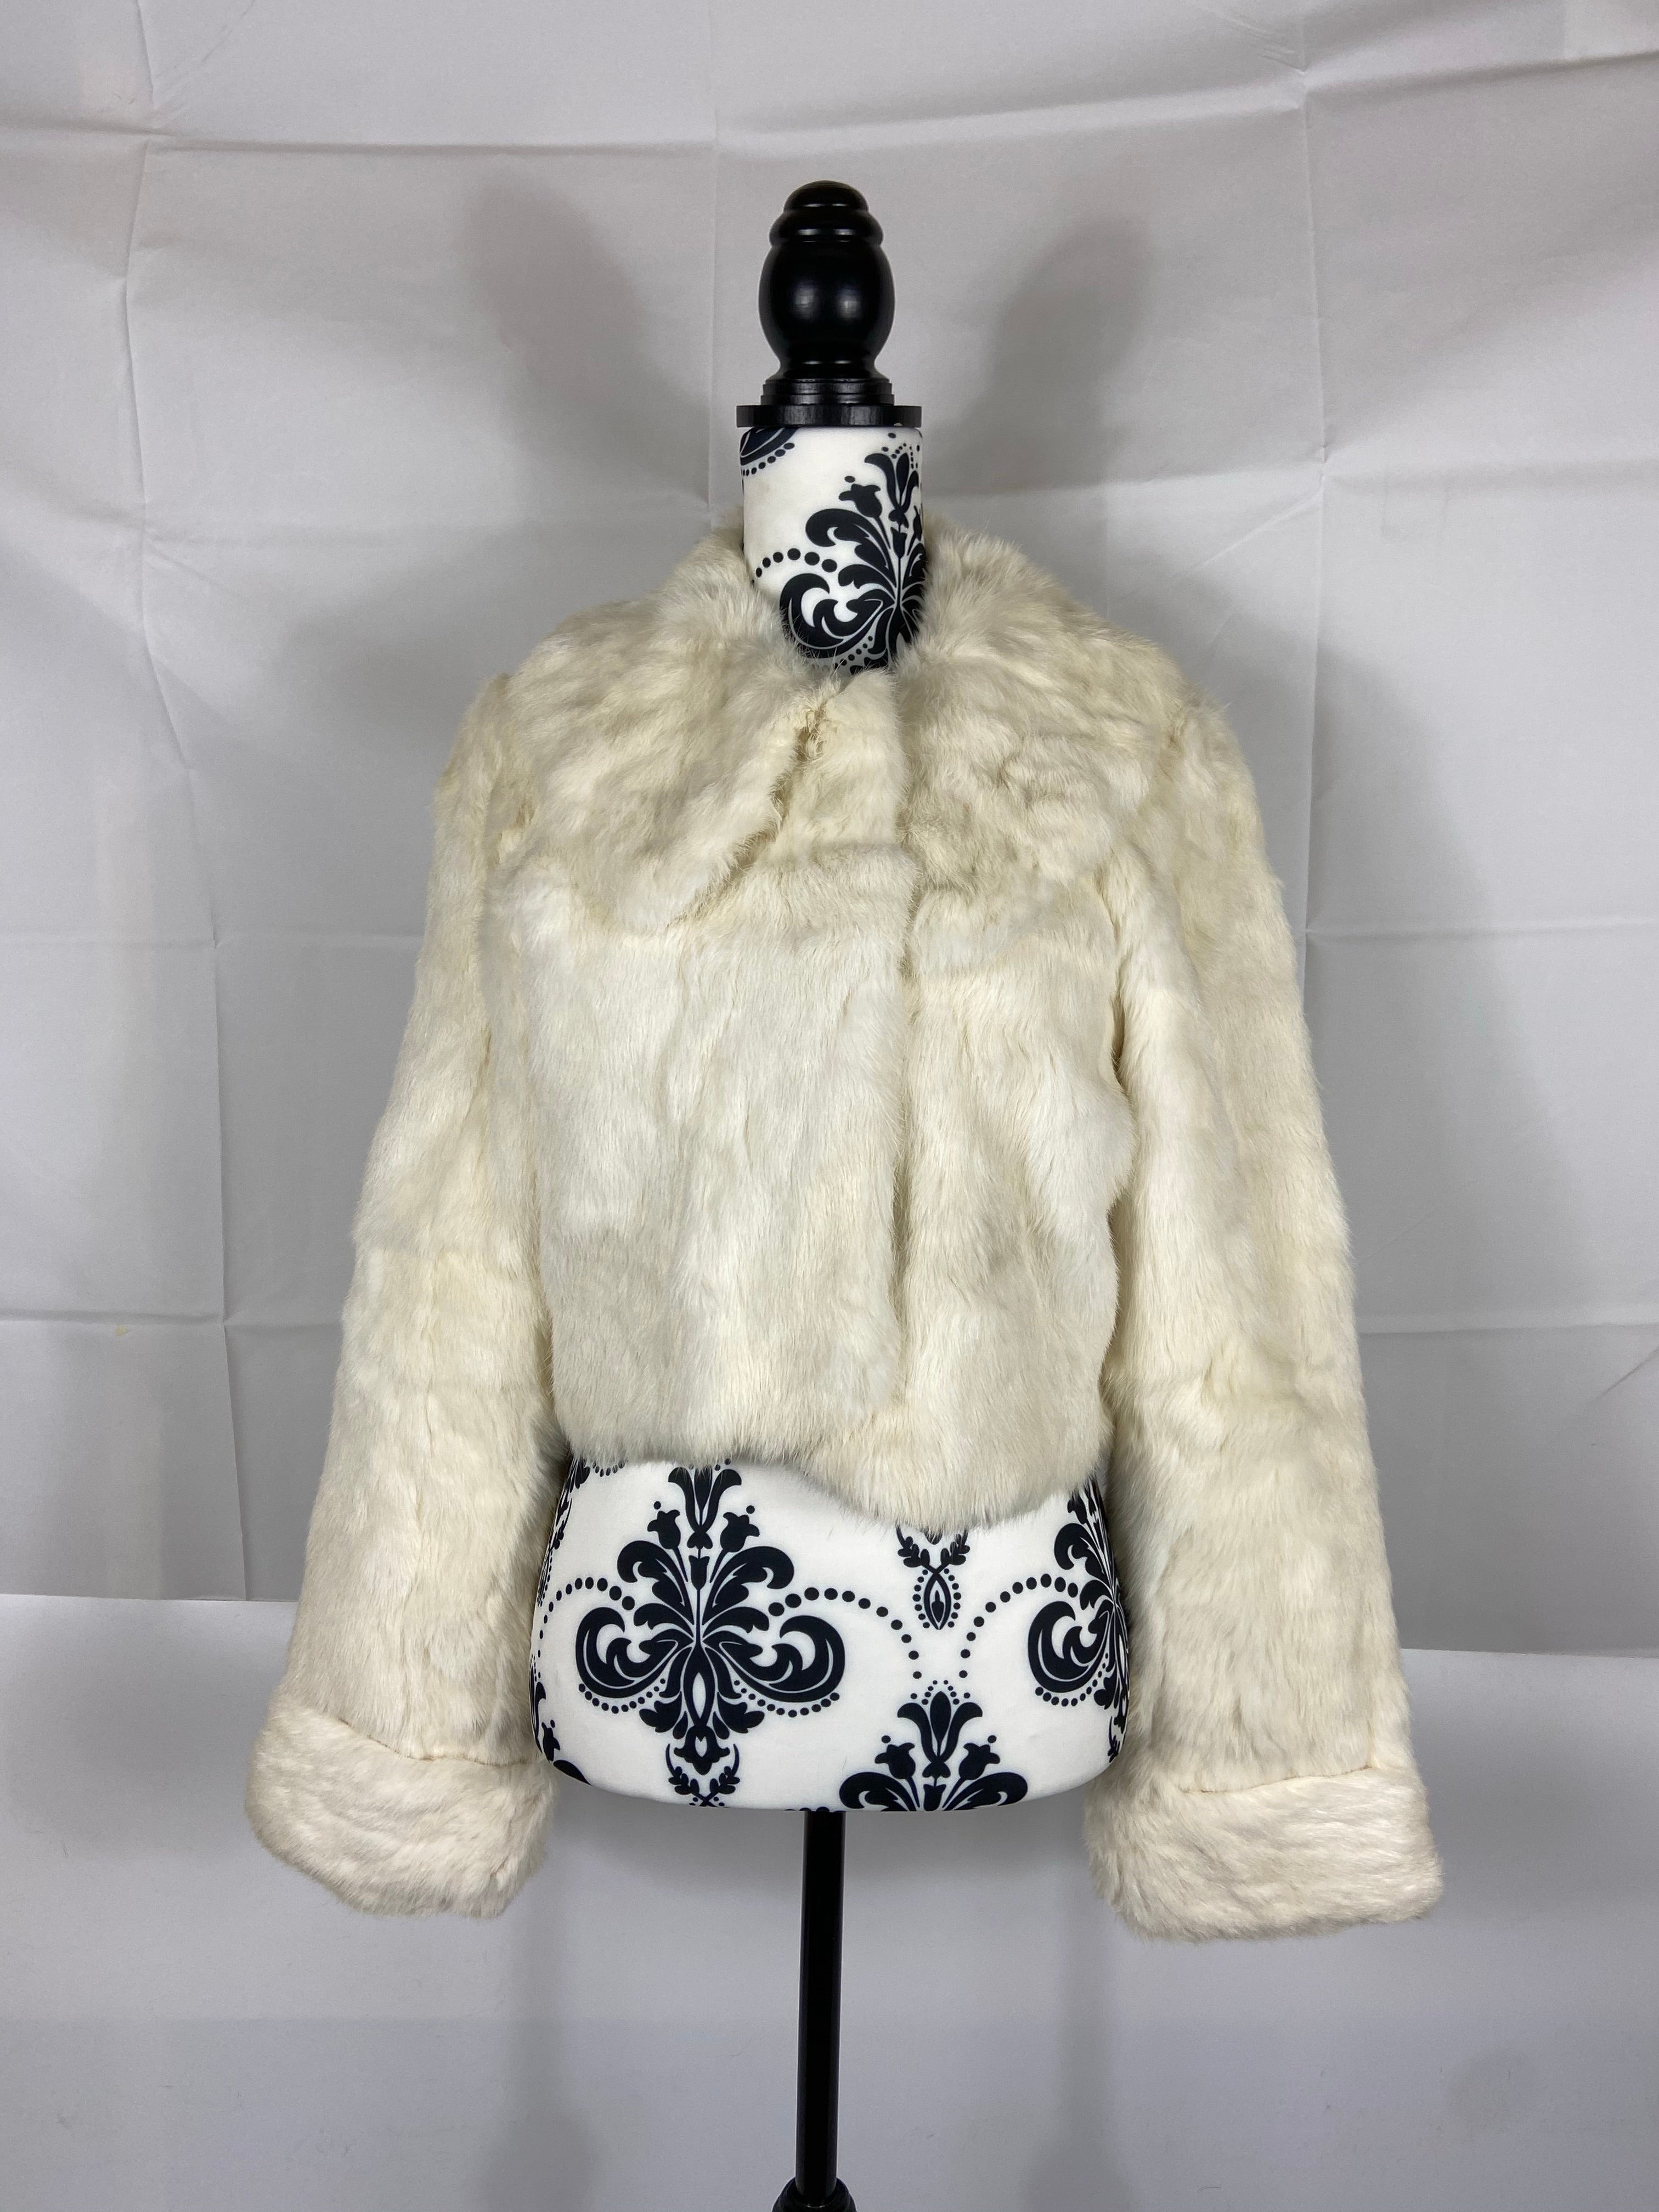 White Rabbit Fur Jacket with Fox Collar - Size S